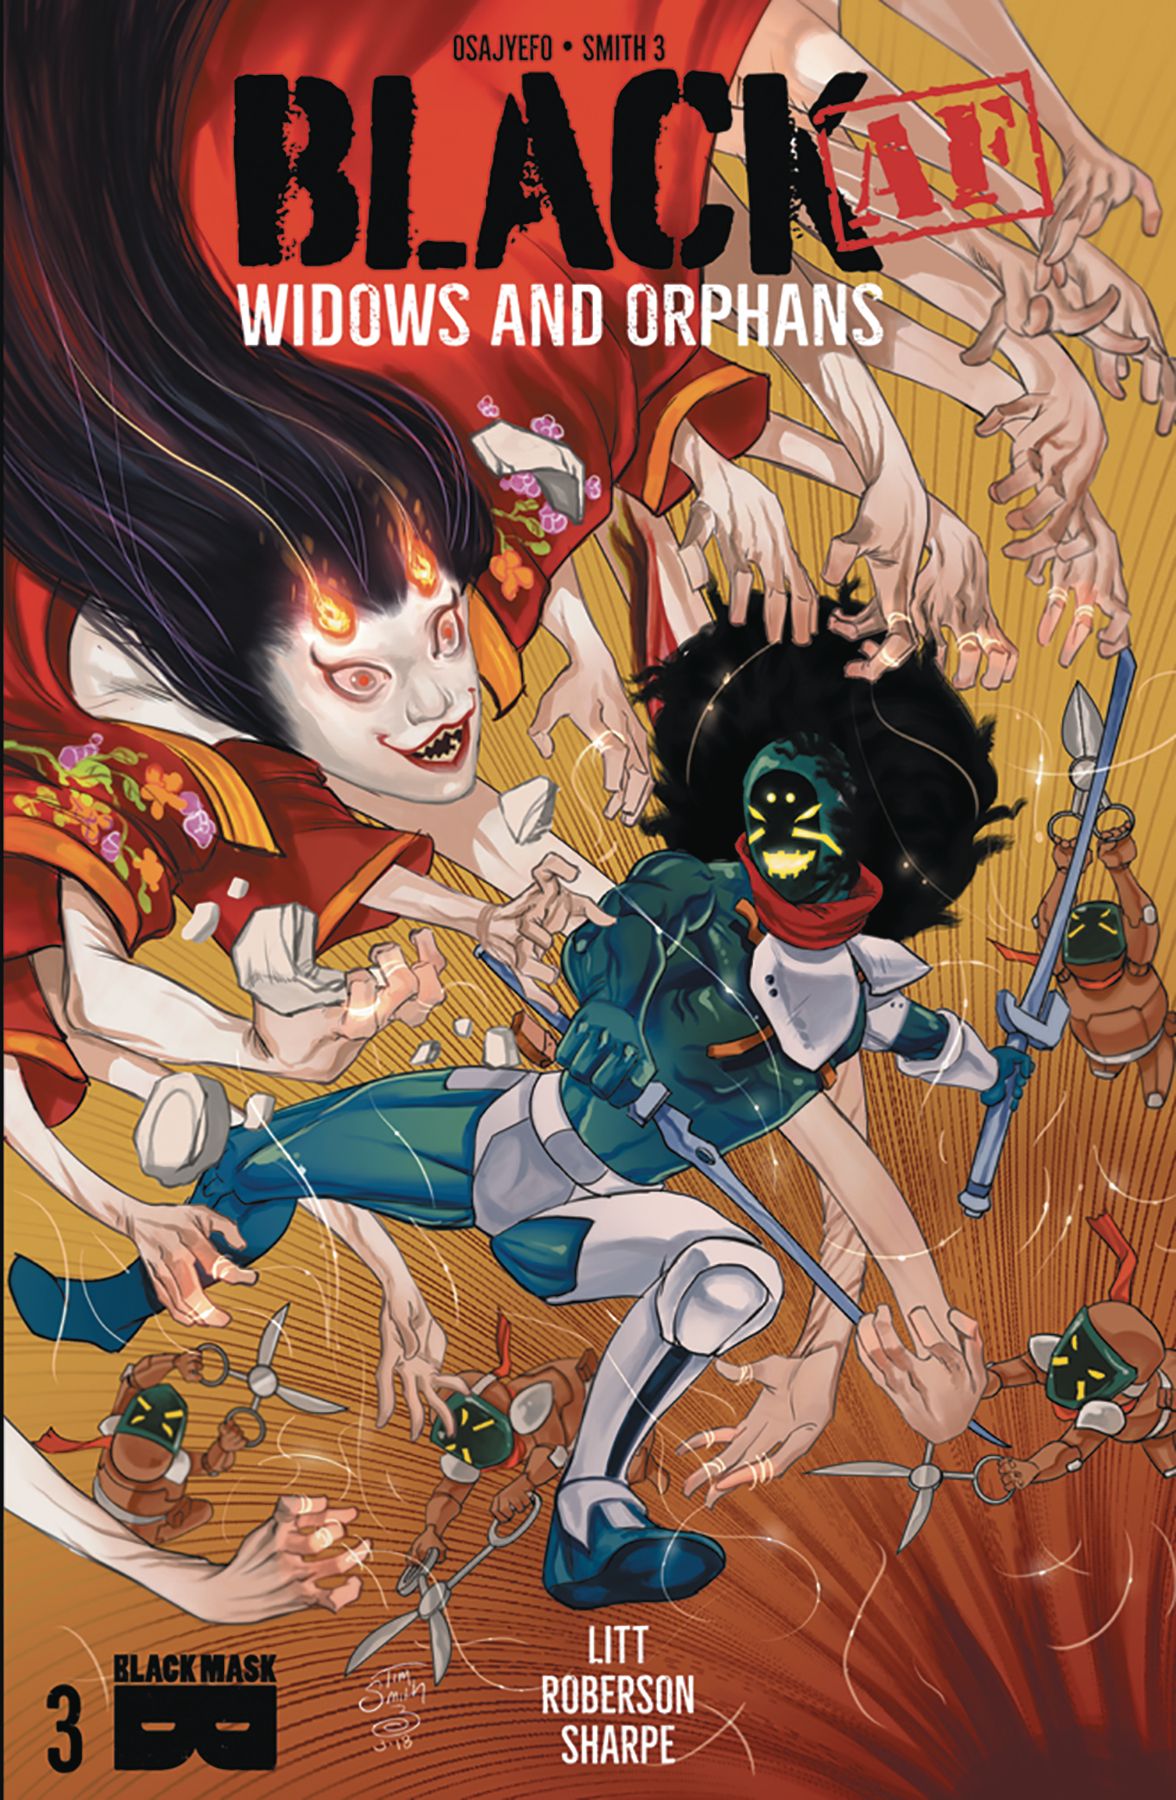 Black: Widows and Orphans #3 Comic